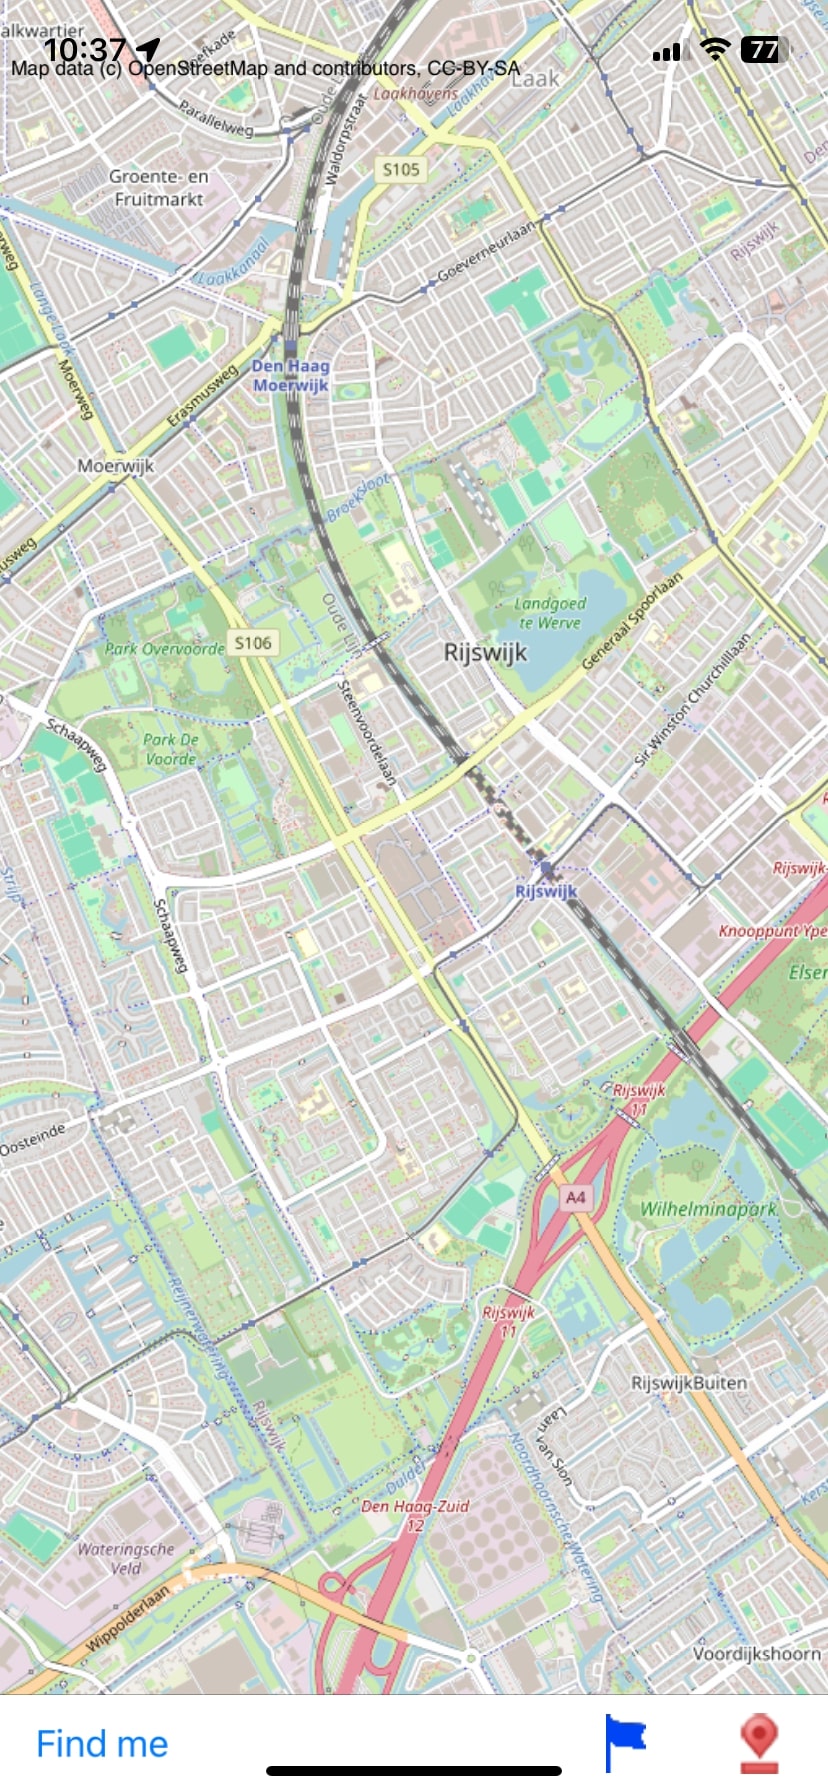 File:Mobile streetmaps screenshot.jpg